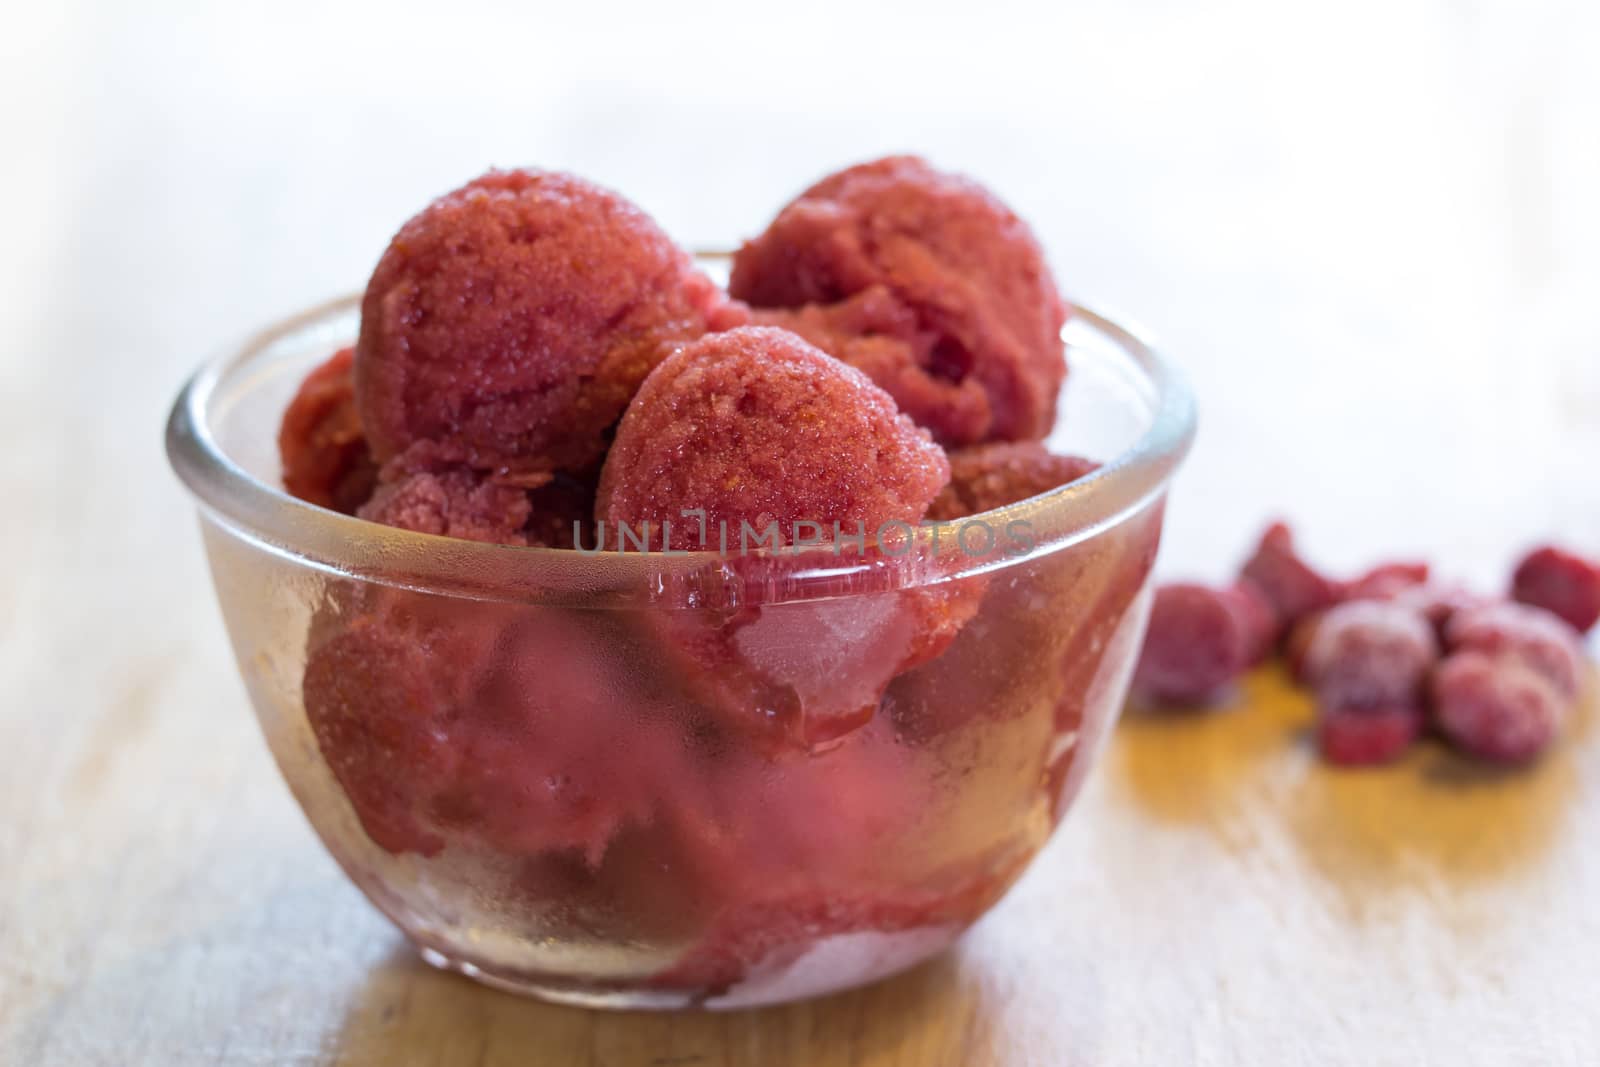 Home made raspberry ice-cream by wyoosumran